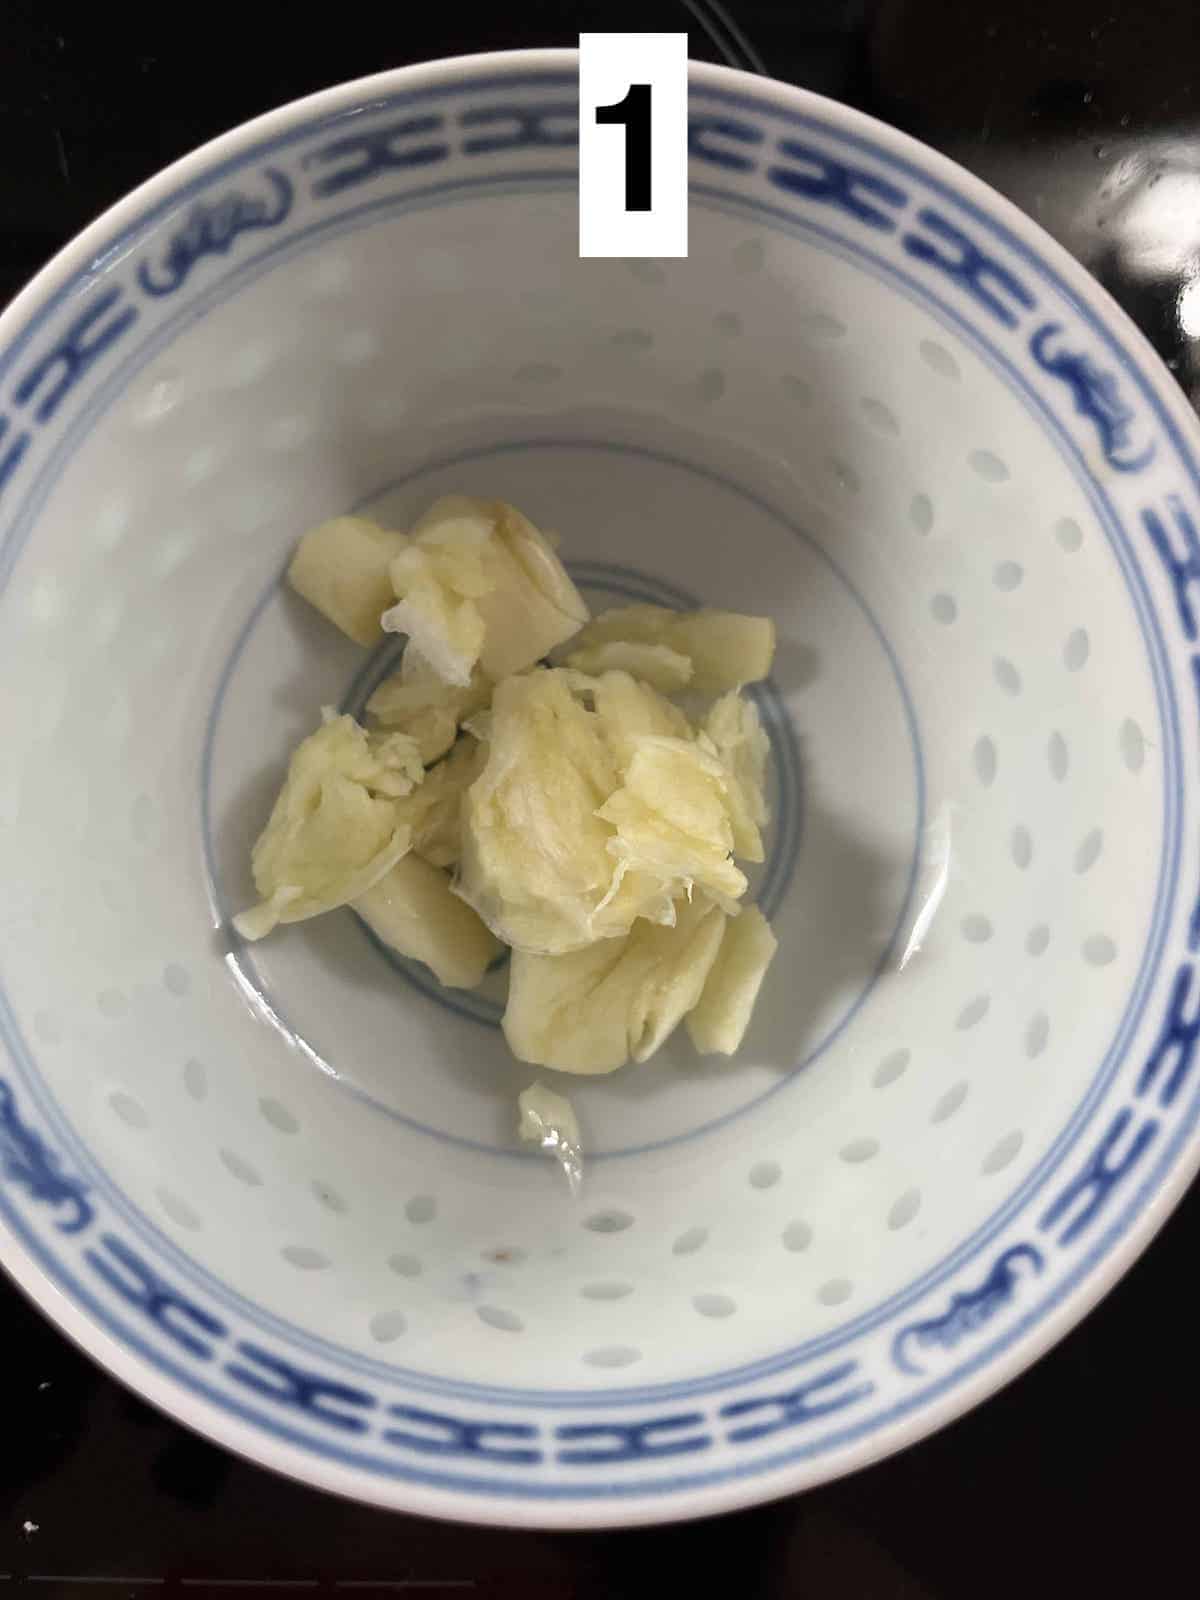 Smashed garlic in a bowl.